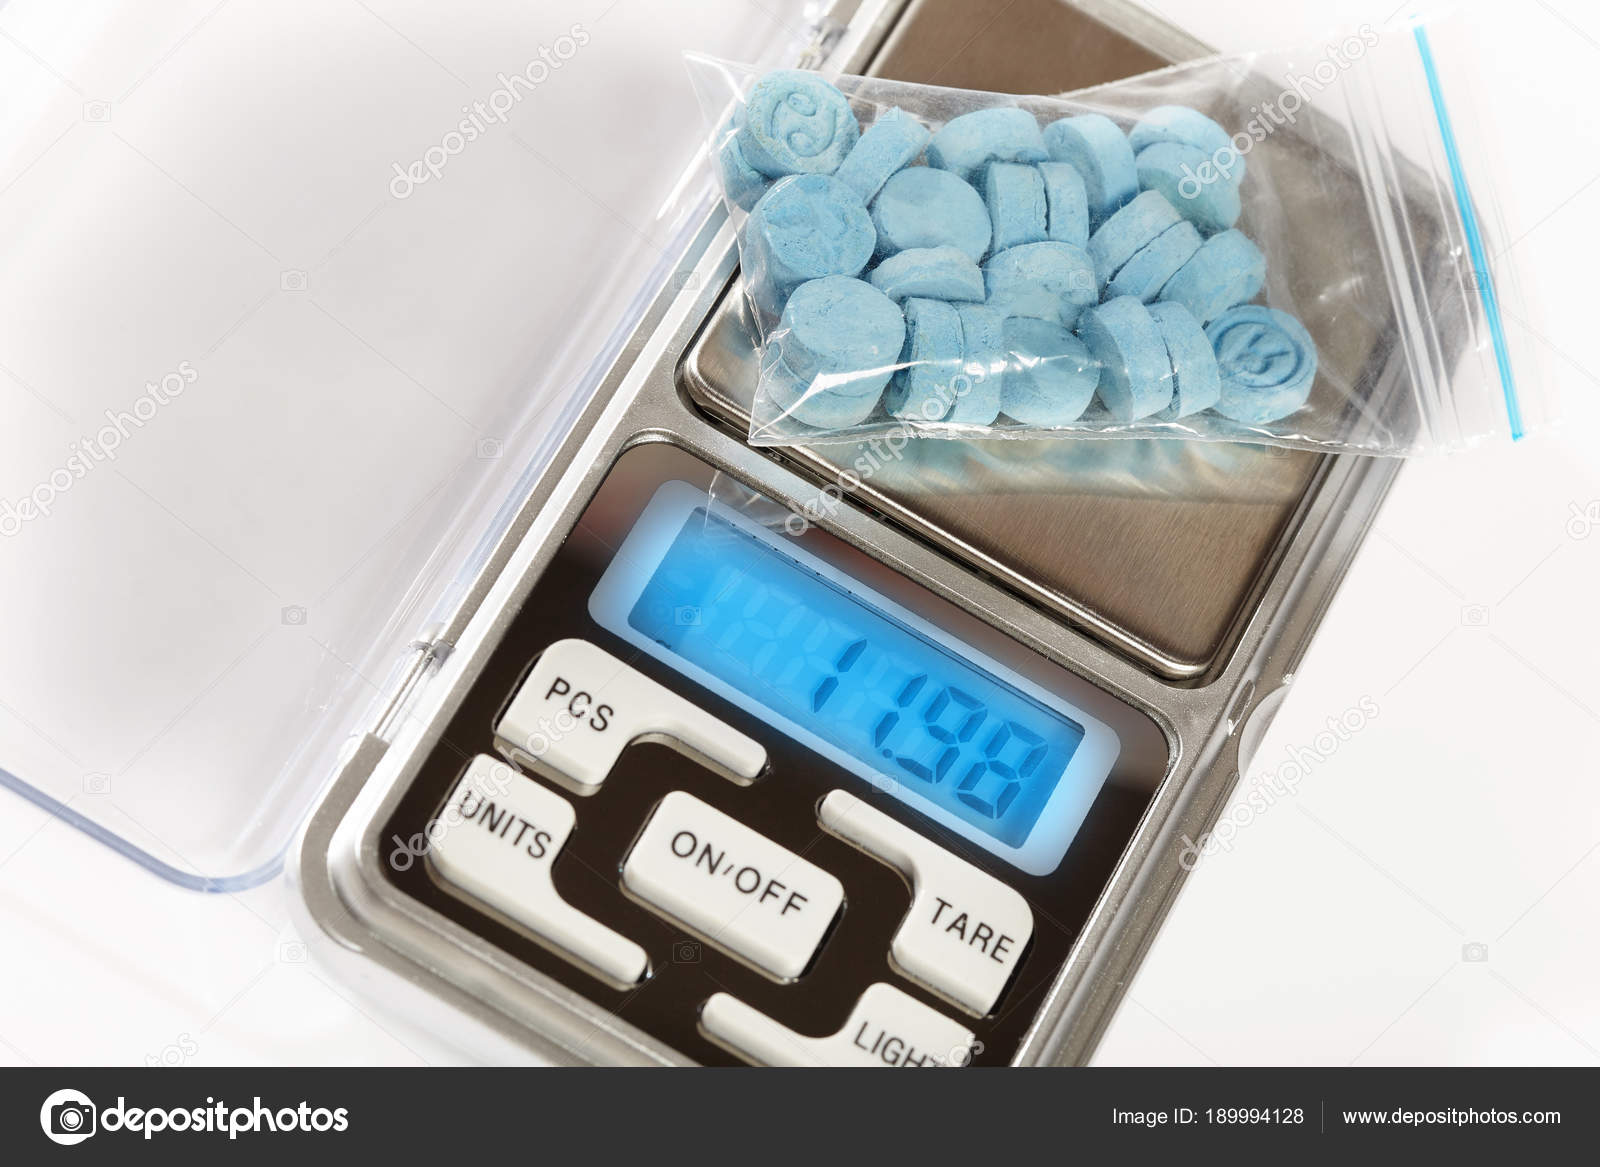 https://st3.depositphotos.com/2287479/18999/i/1600/depositphotos_189994128-stock-photo-pills-mdma-synthetic-drugs-small.jpg